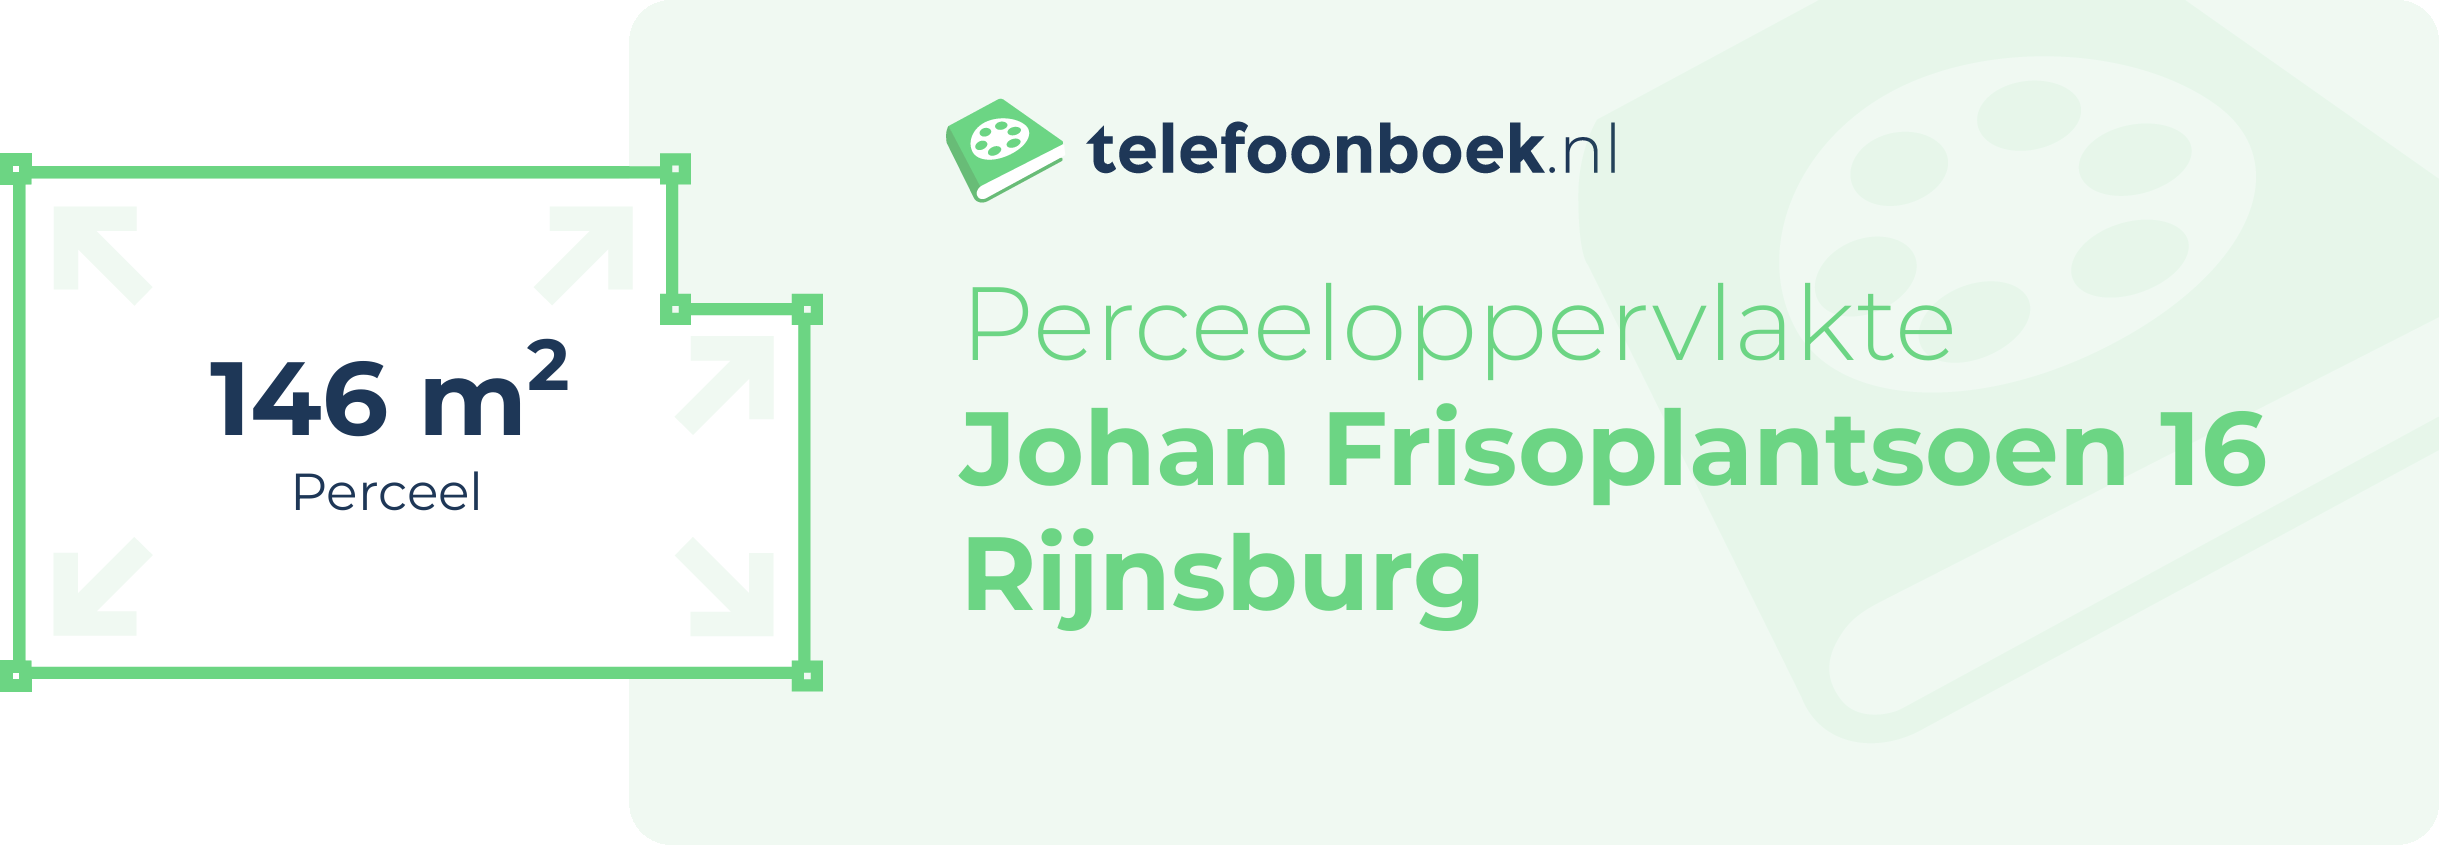 Perceeloppervlakte Johan Frisoplantsoen 16 Rijnsburg